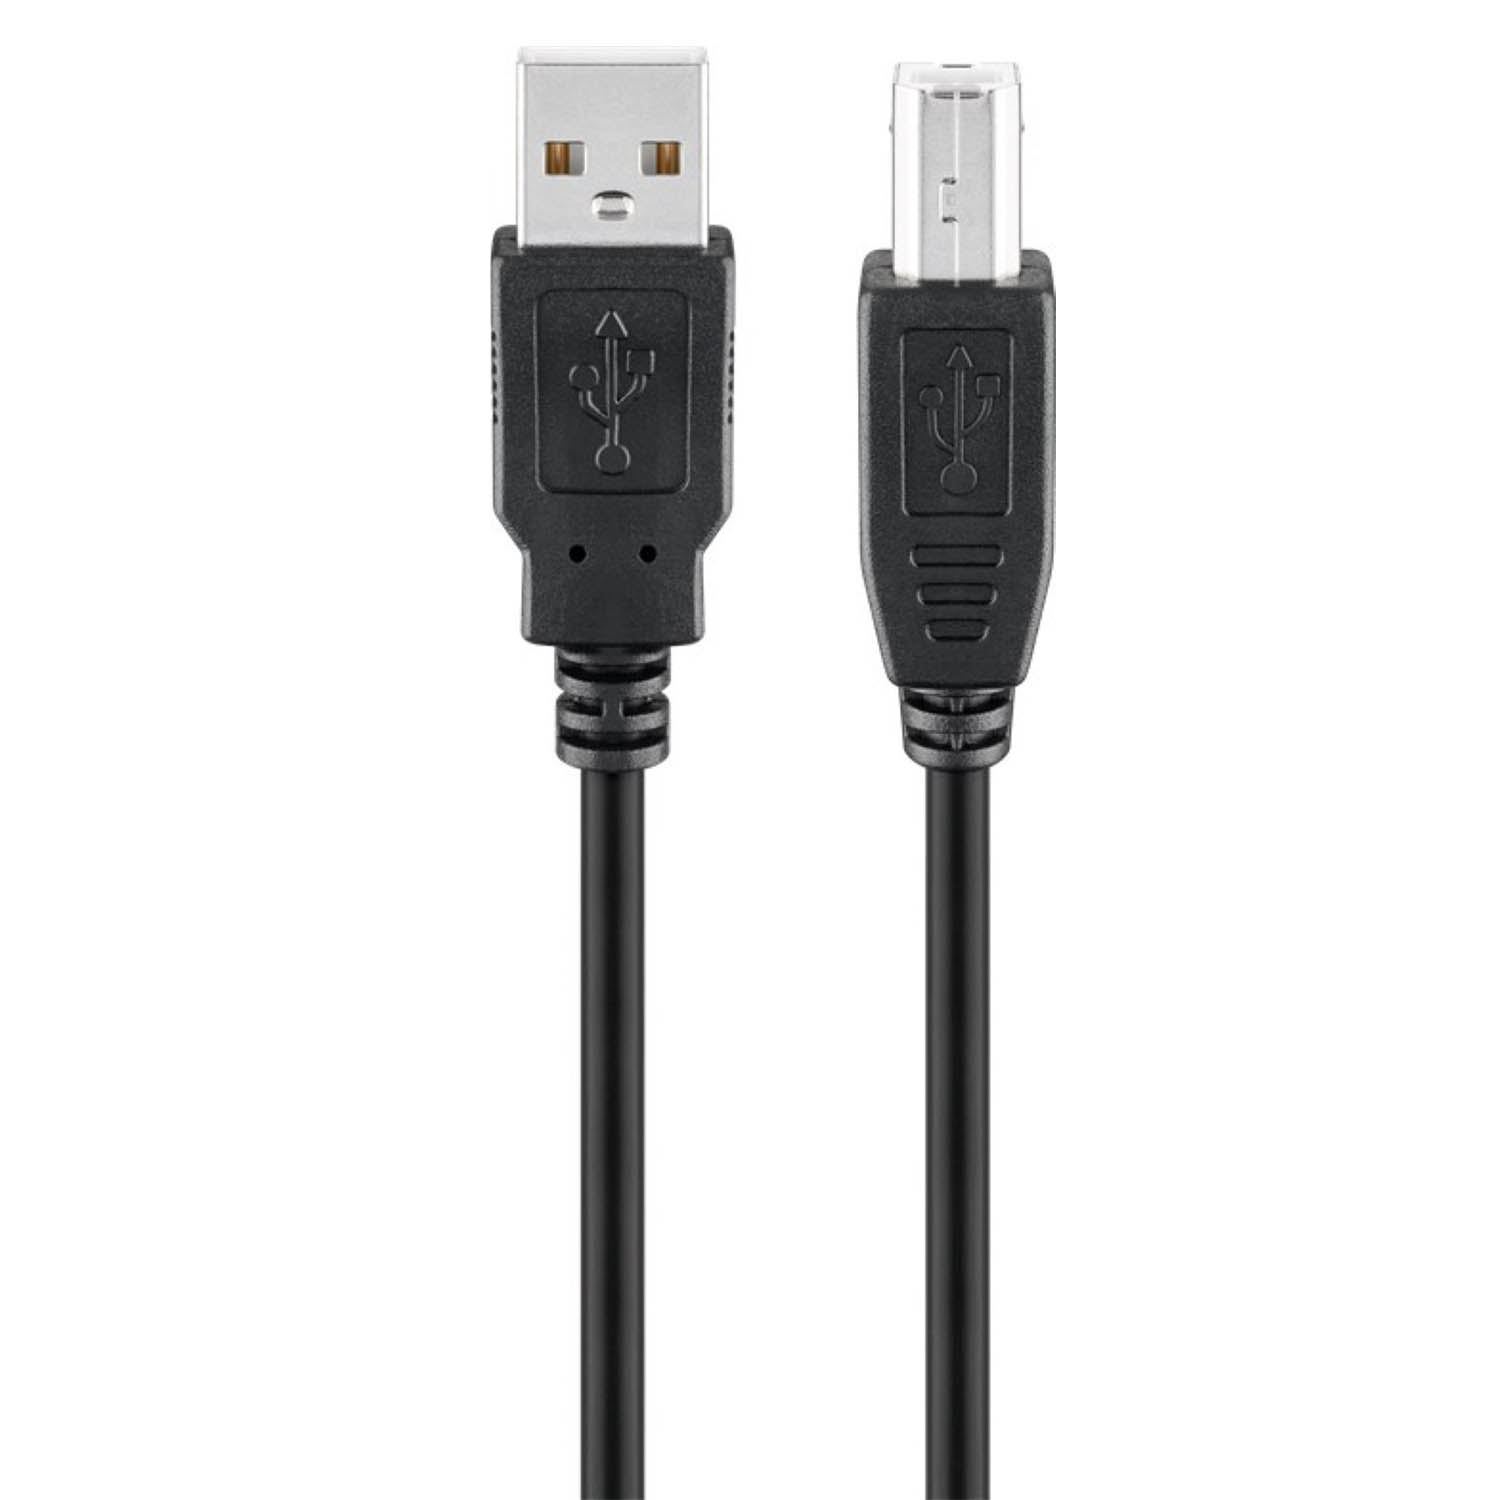 USB 2.0 Hi-Speed Kabel, GOOBAY schwarz USB Kabel